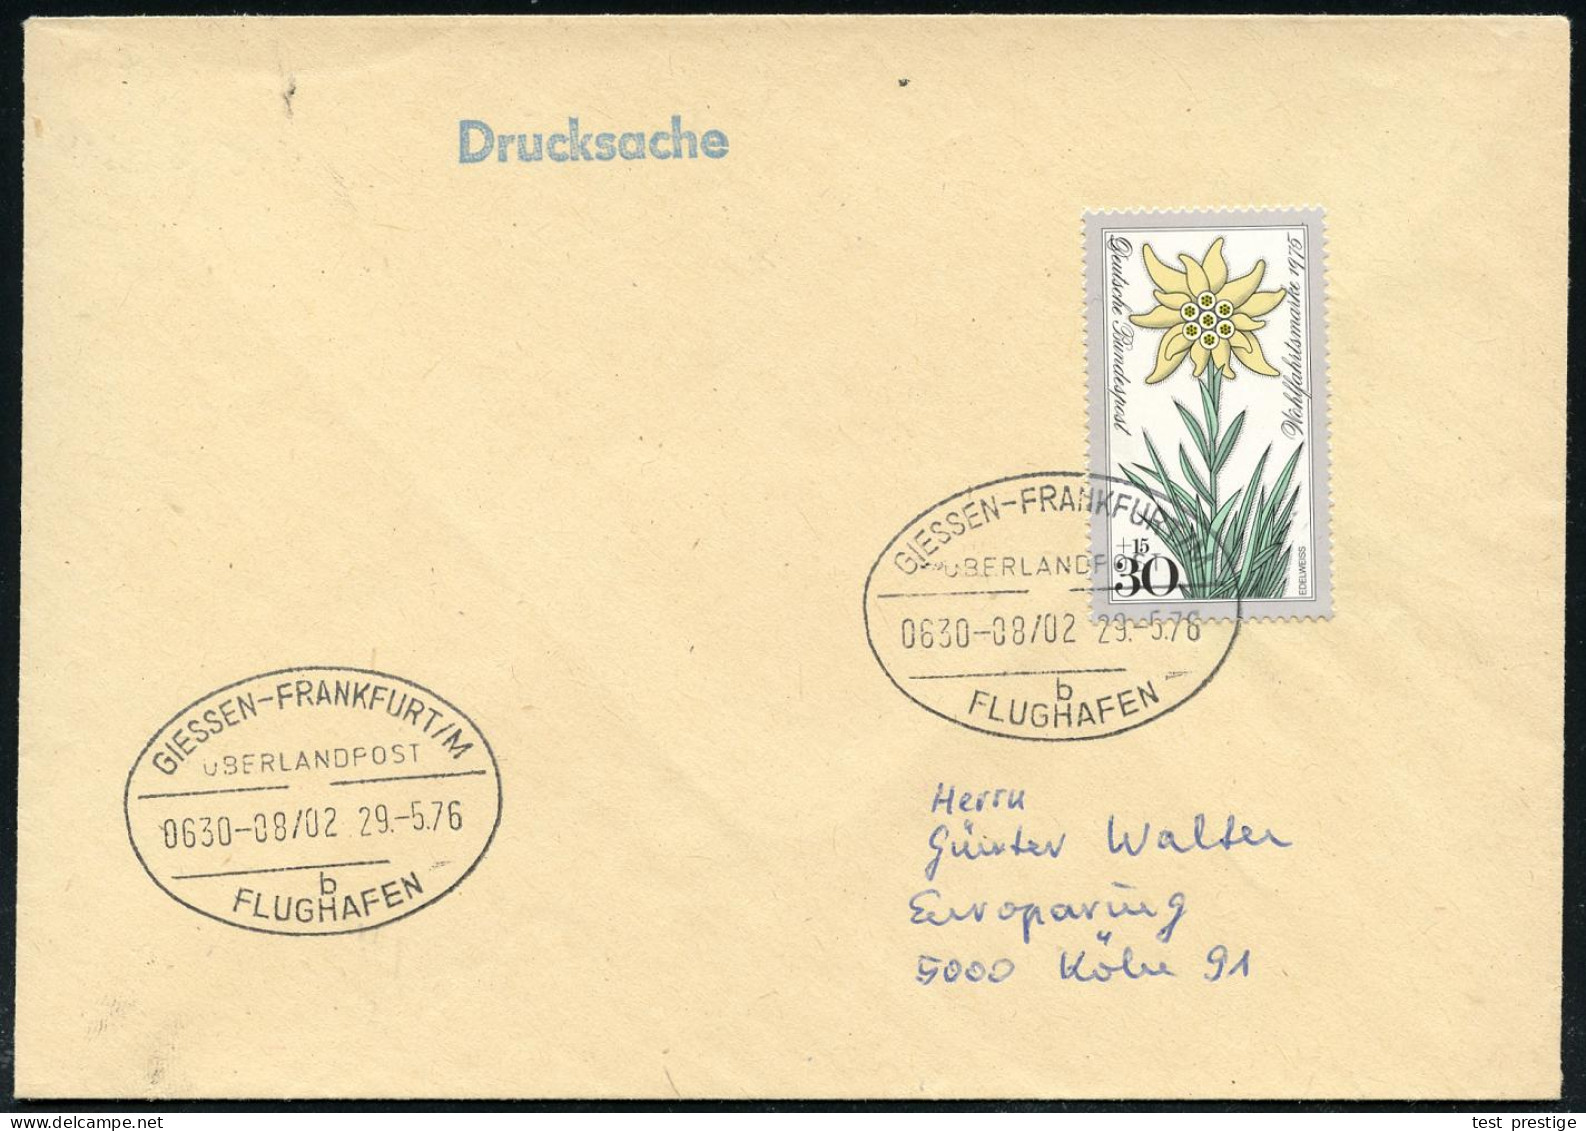 GIESSEN-FRANKFURT/ M/ ÜBERLANDPOST/ 0630-08/ 02/ B/ FLUGHAFEN 1976 (29.5.) Oval-St. = Mobiles Postamt Im Überland-Postom - Cars